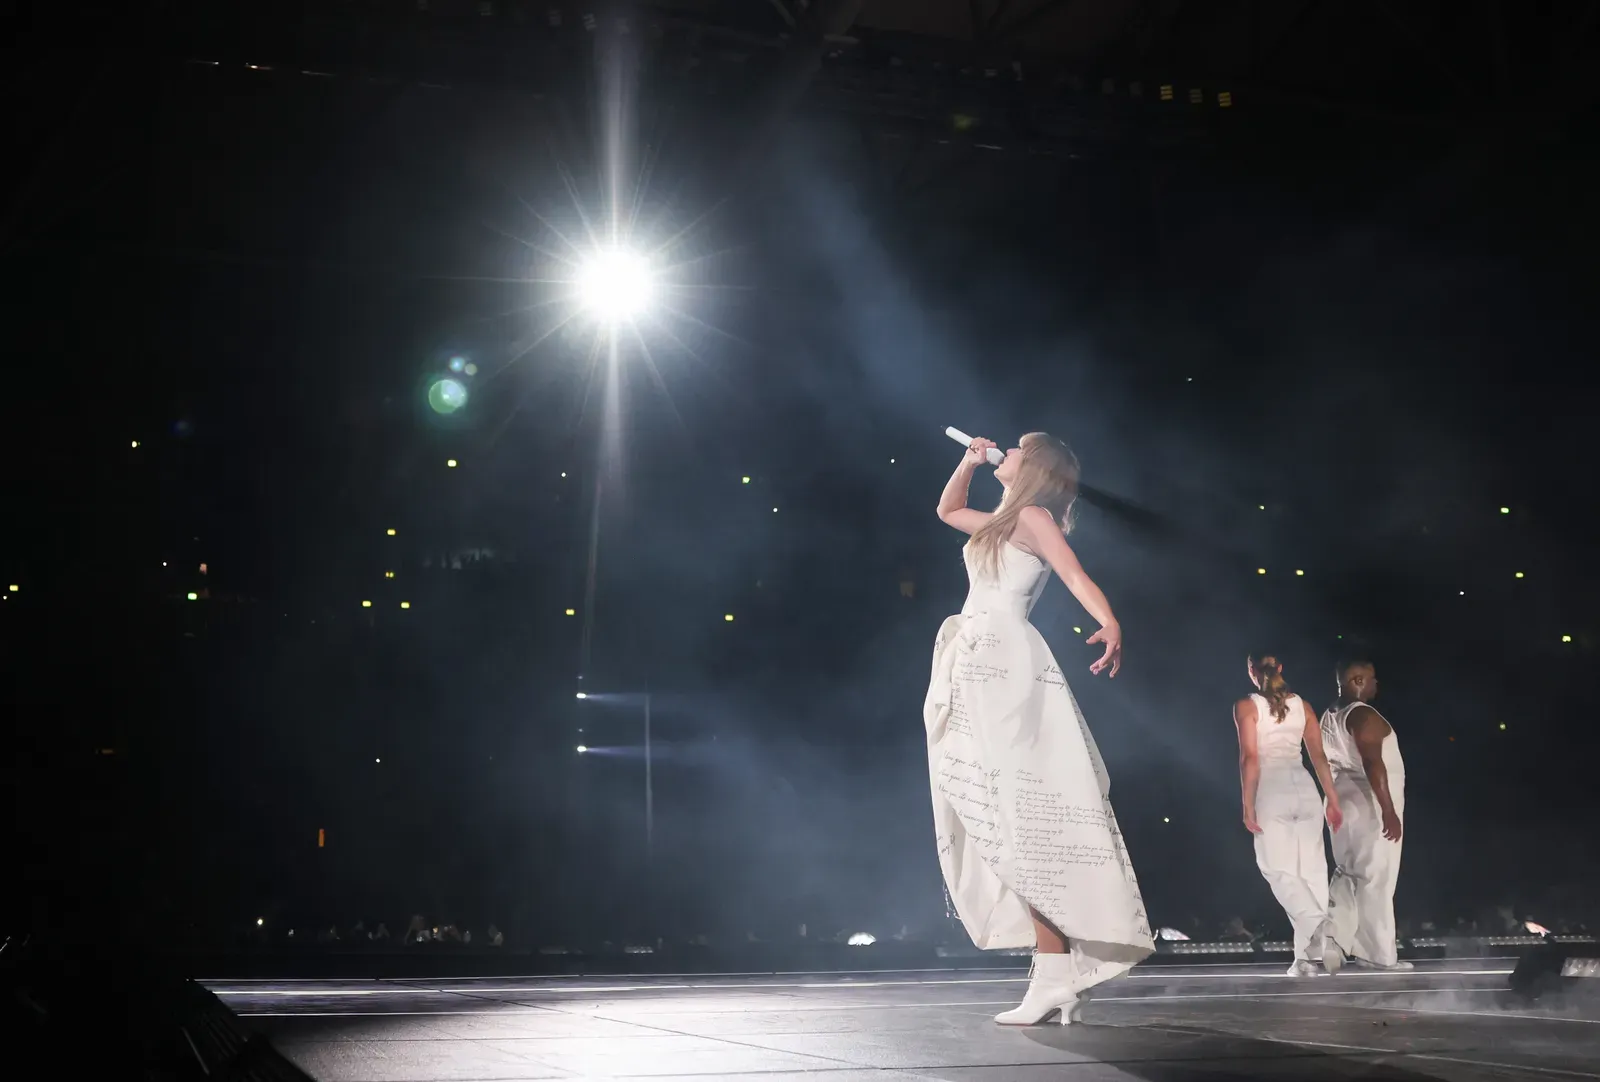 Cerita di Balik Deretan Sepatu Taylor Swift Selama Konser Eras Tour